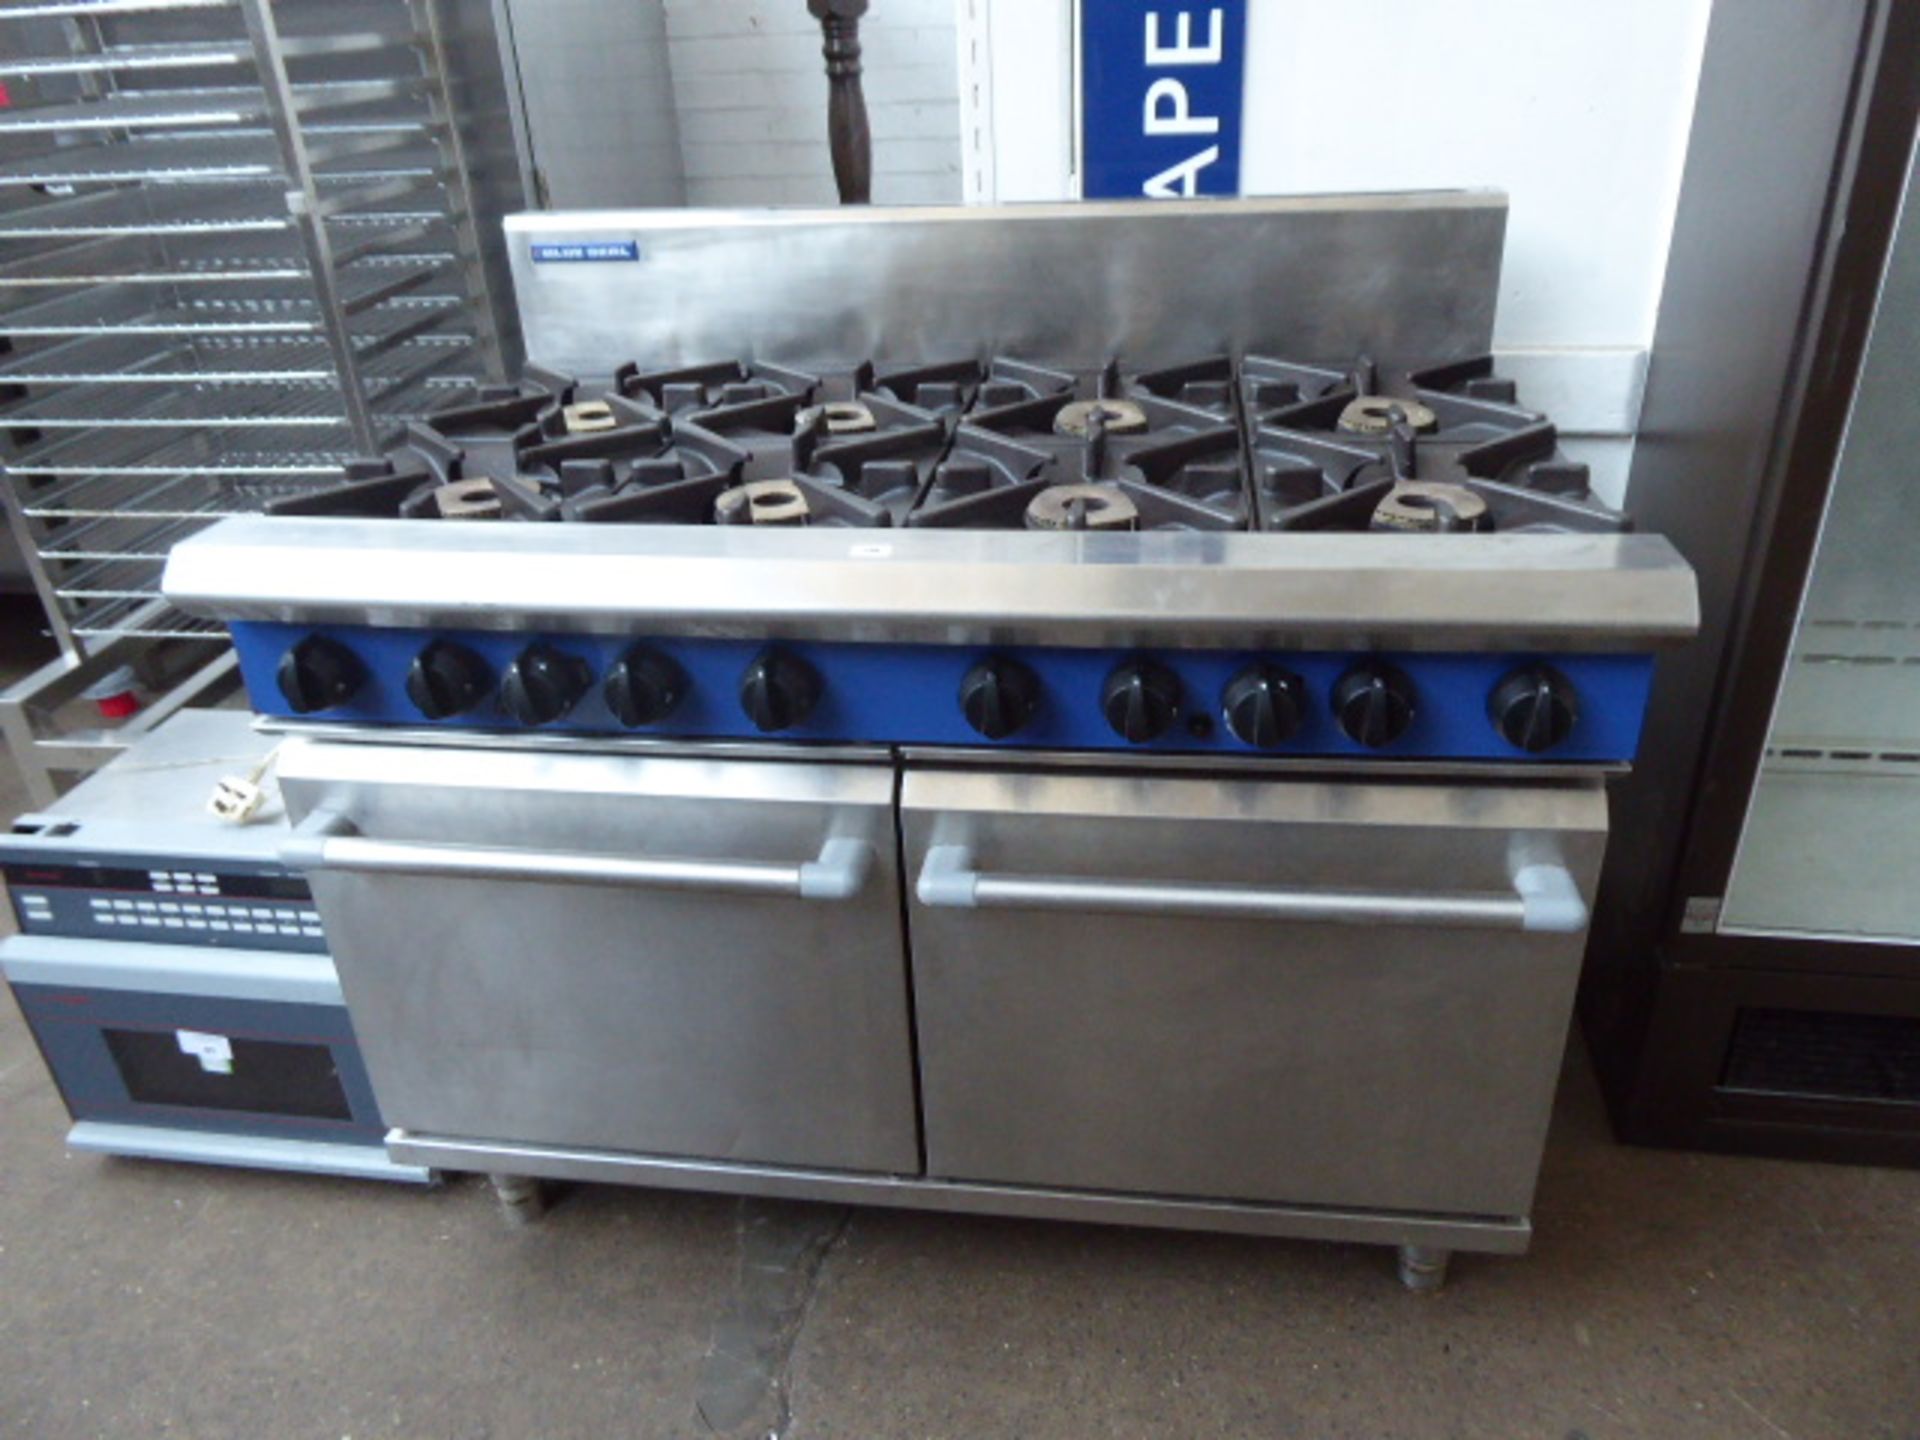 120cm gas Blue Seal 8 burner cooker with 2 single door ovens under - Image 2 of 4